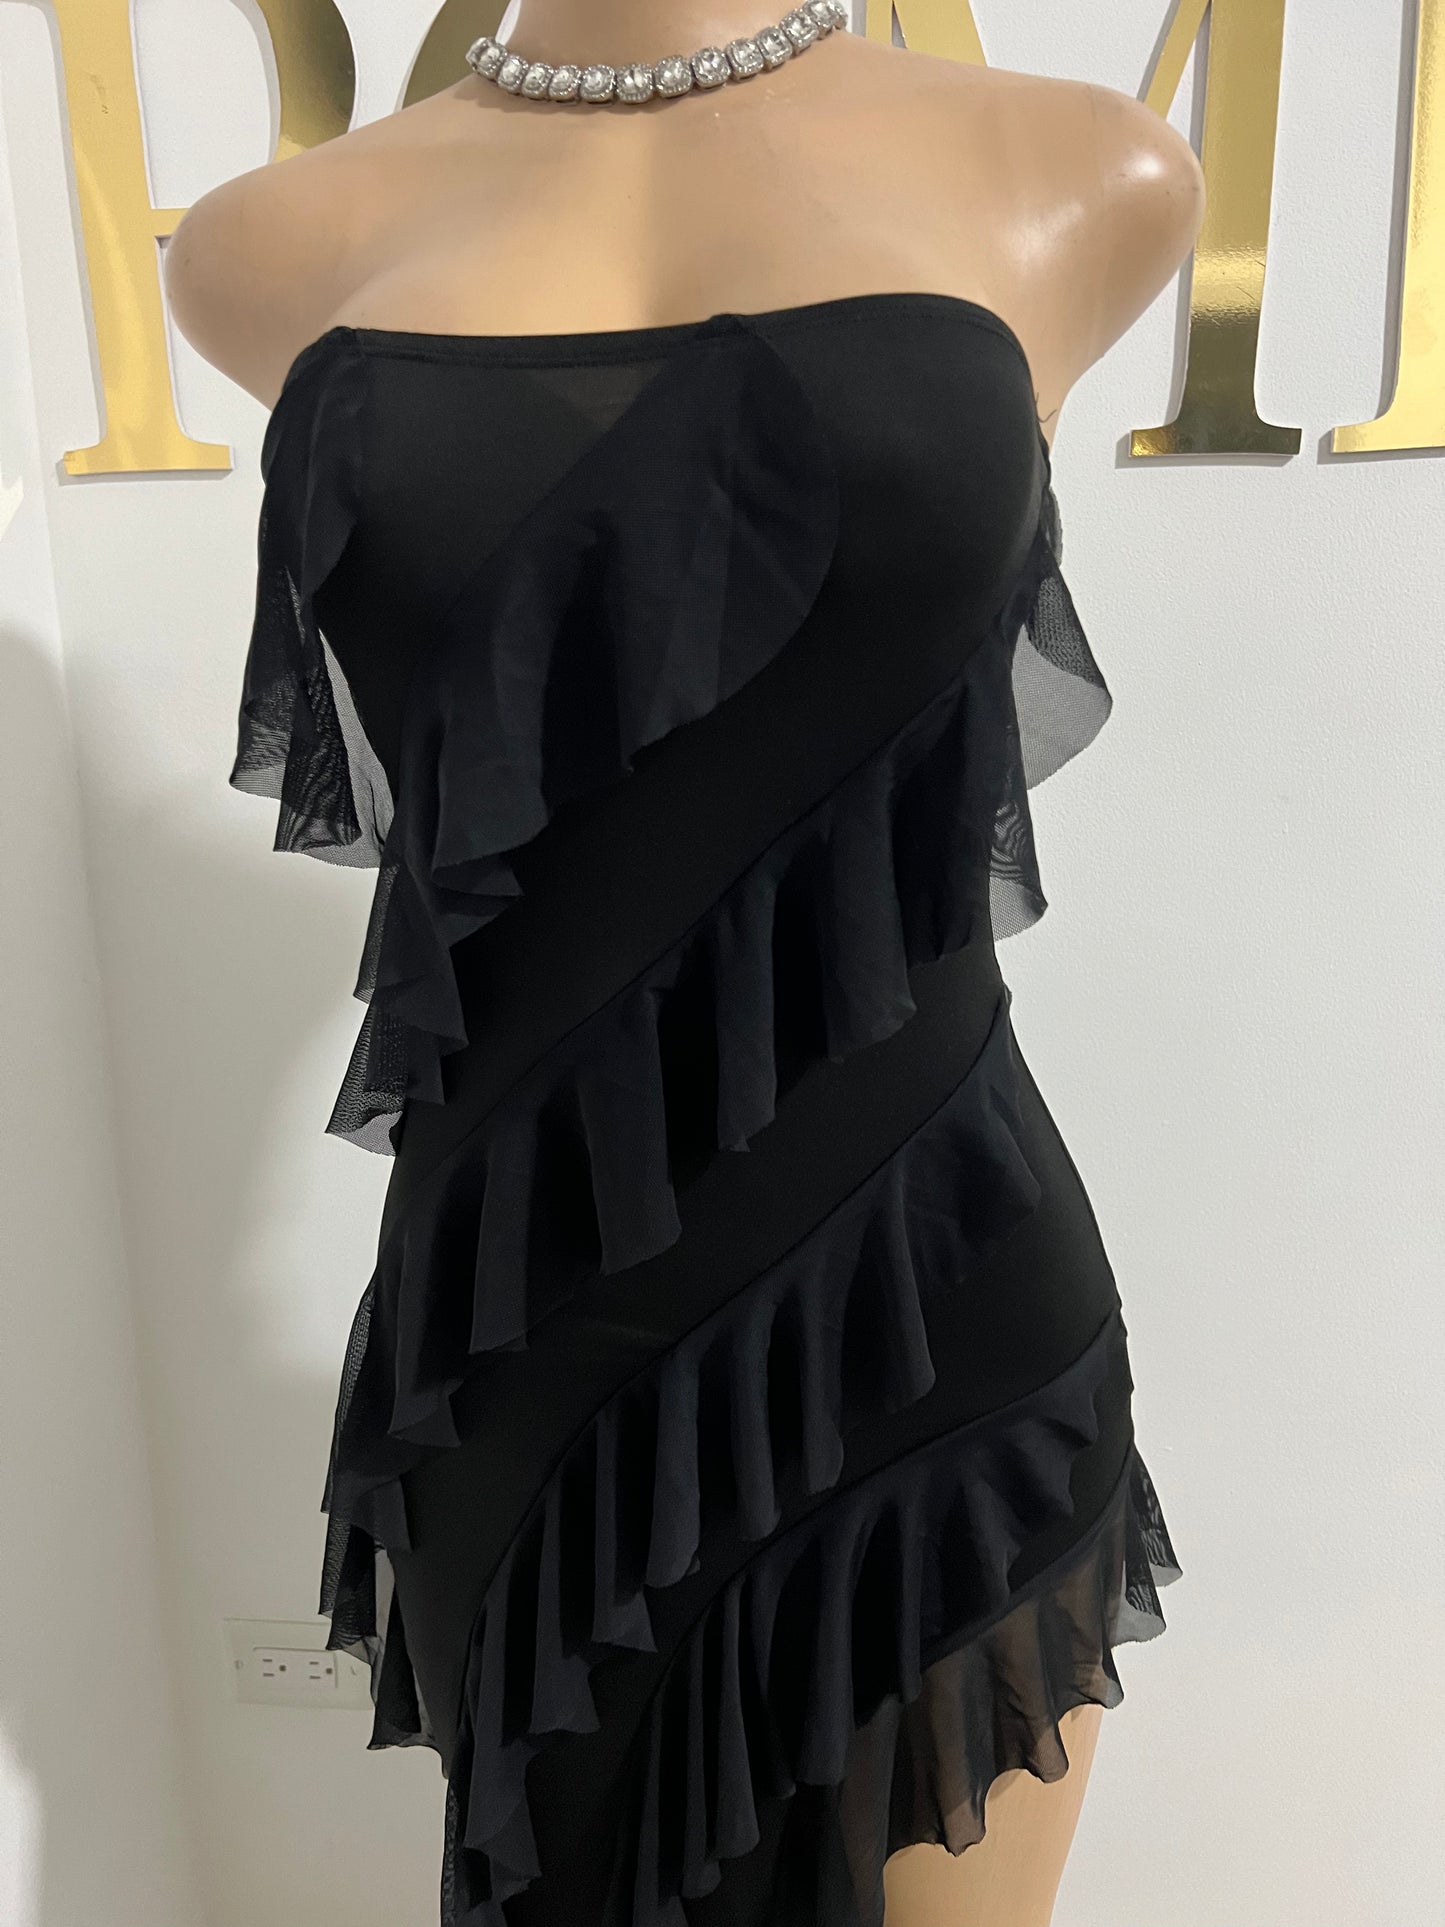 Chelsea Ruffle Dress (Black)